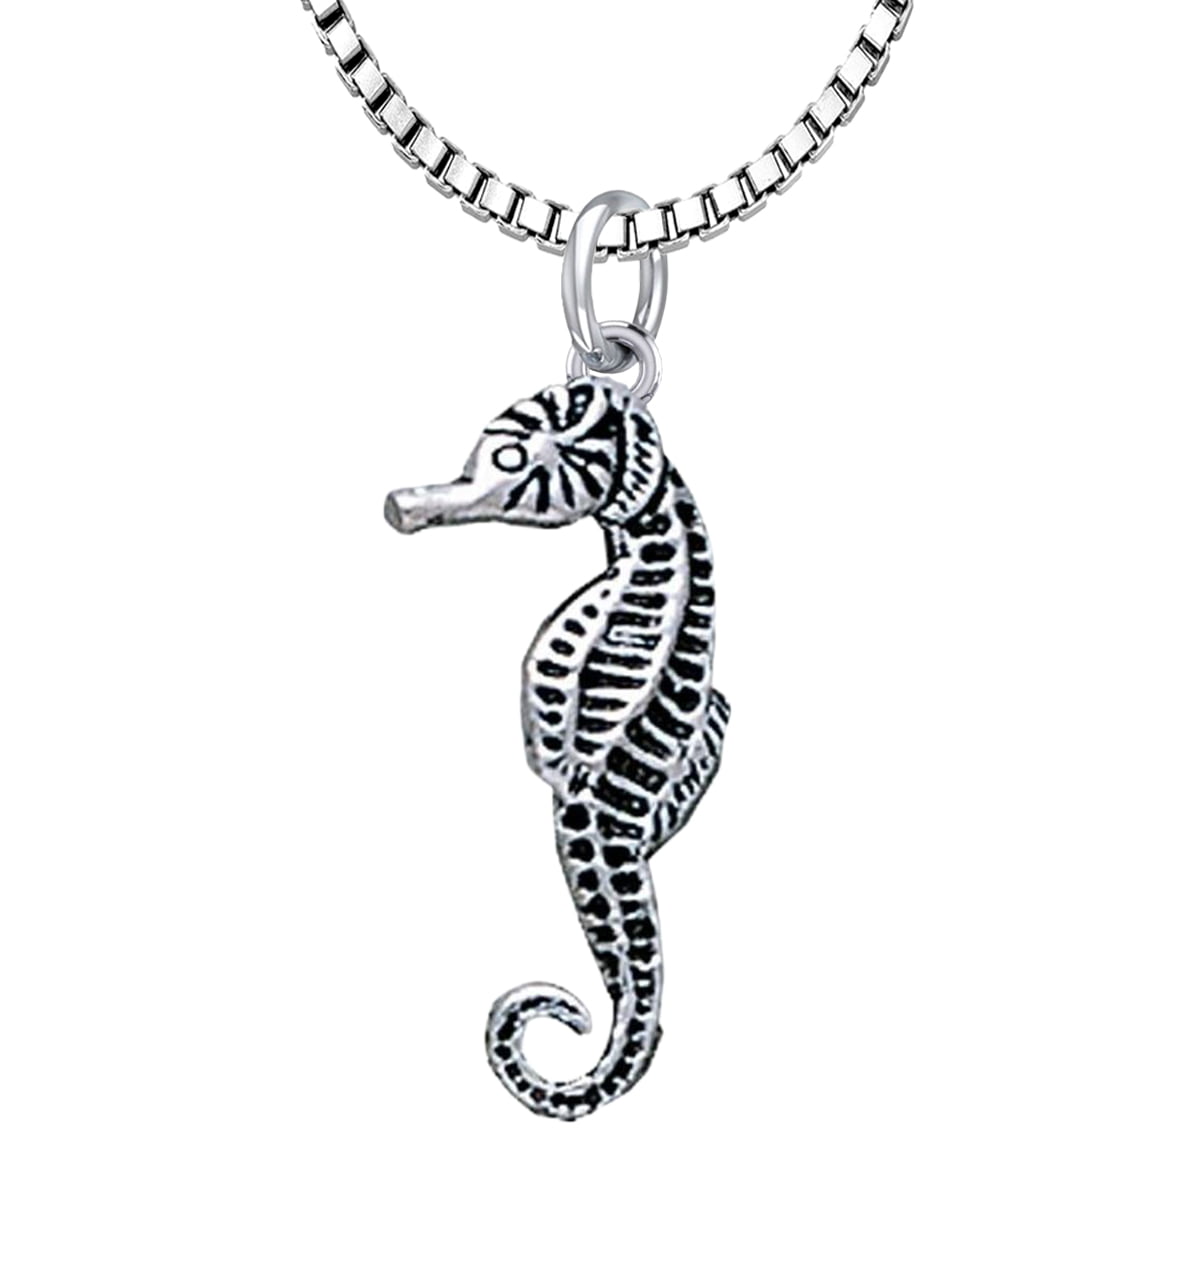 New Solid 925 Silver 3D Seahorse Aquatic Charm Pendant for Necklace - Walmart.com